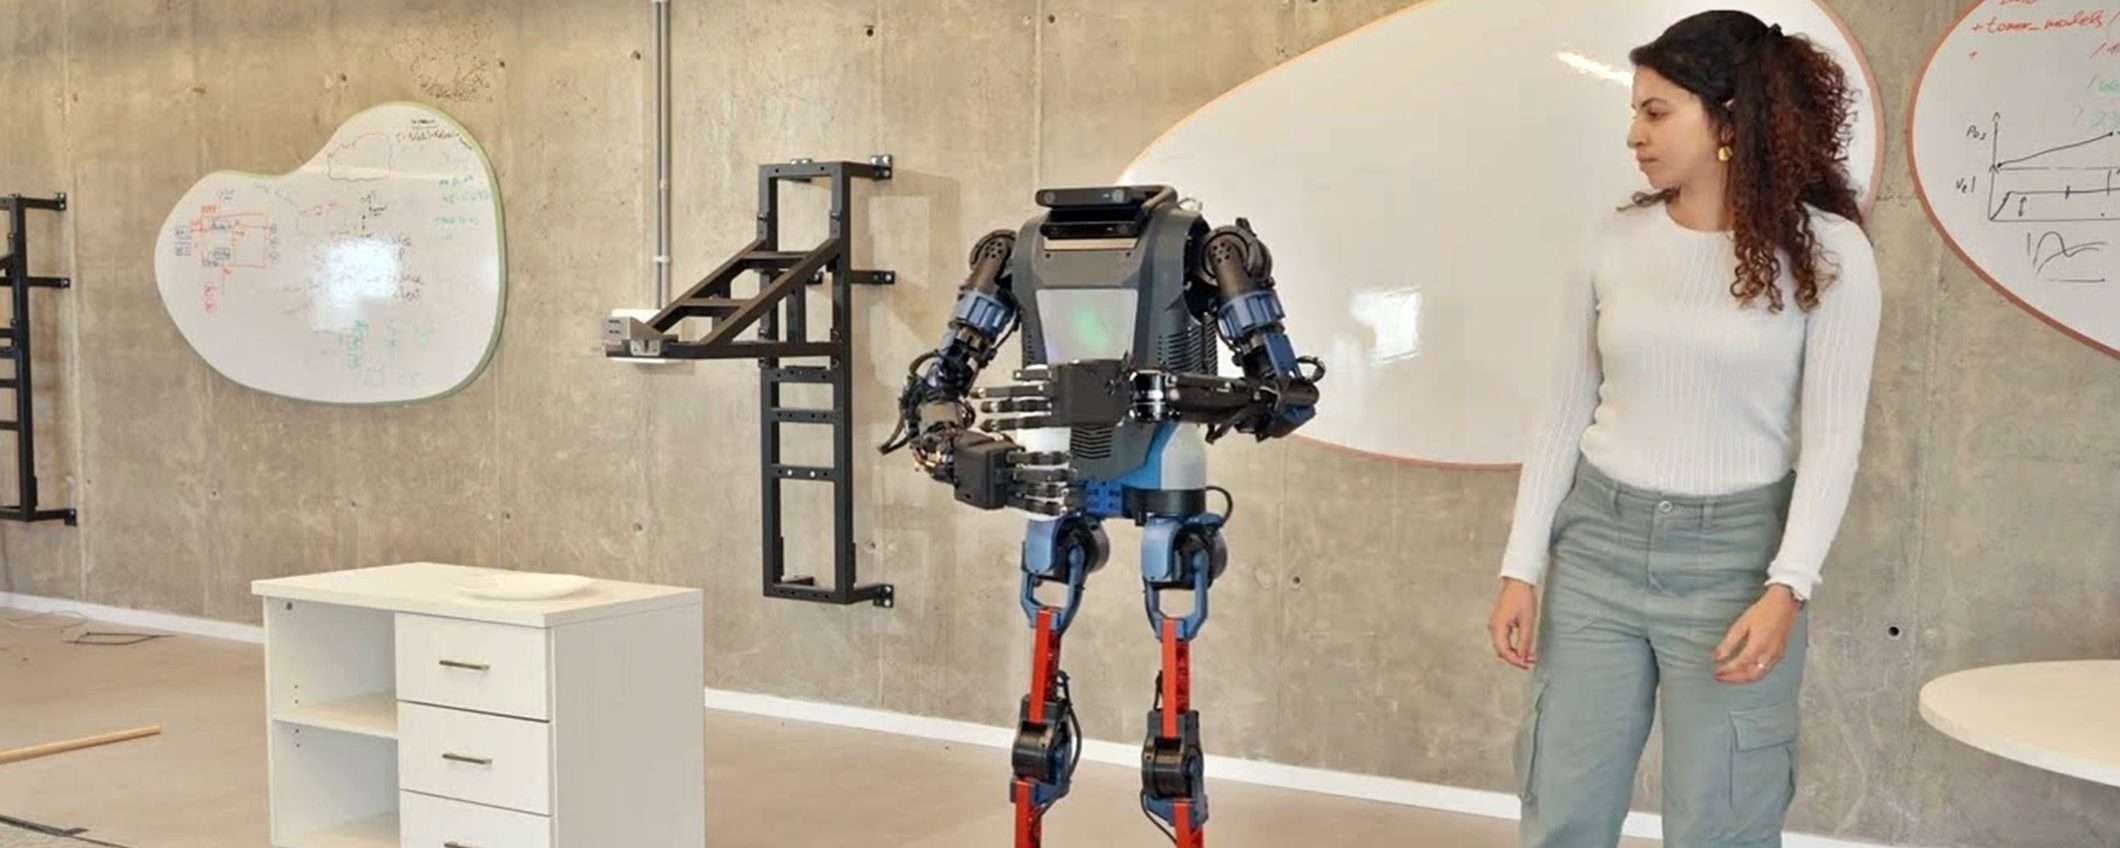 MenteeBot, il robot umanoide che 